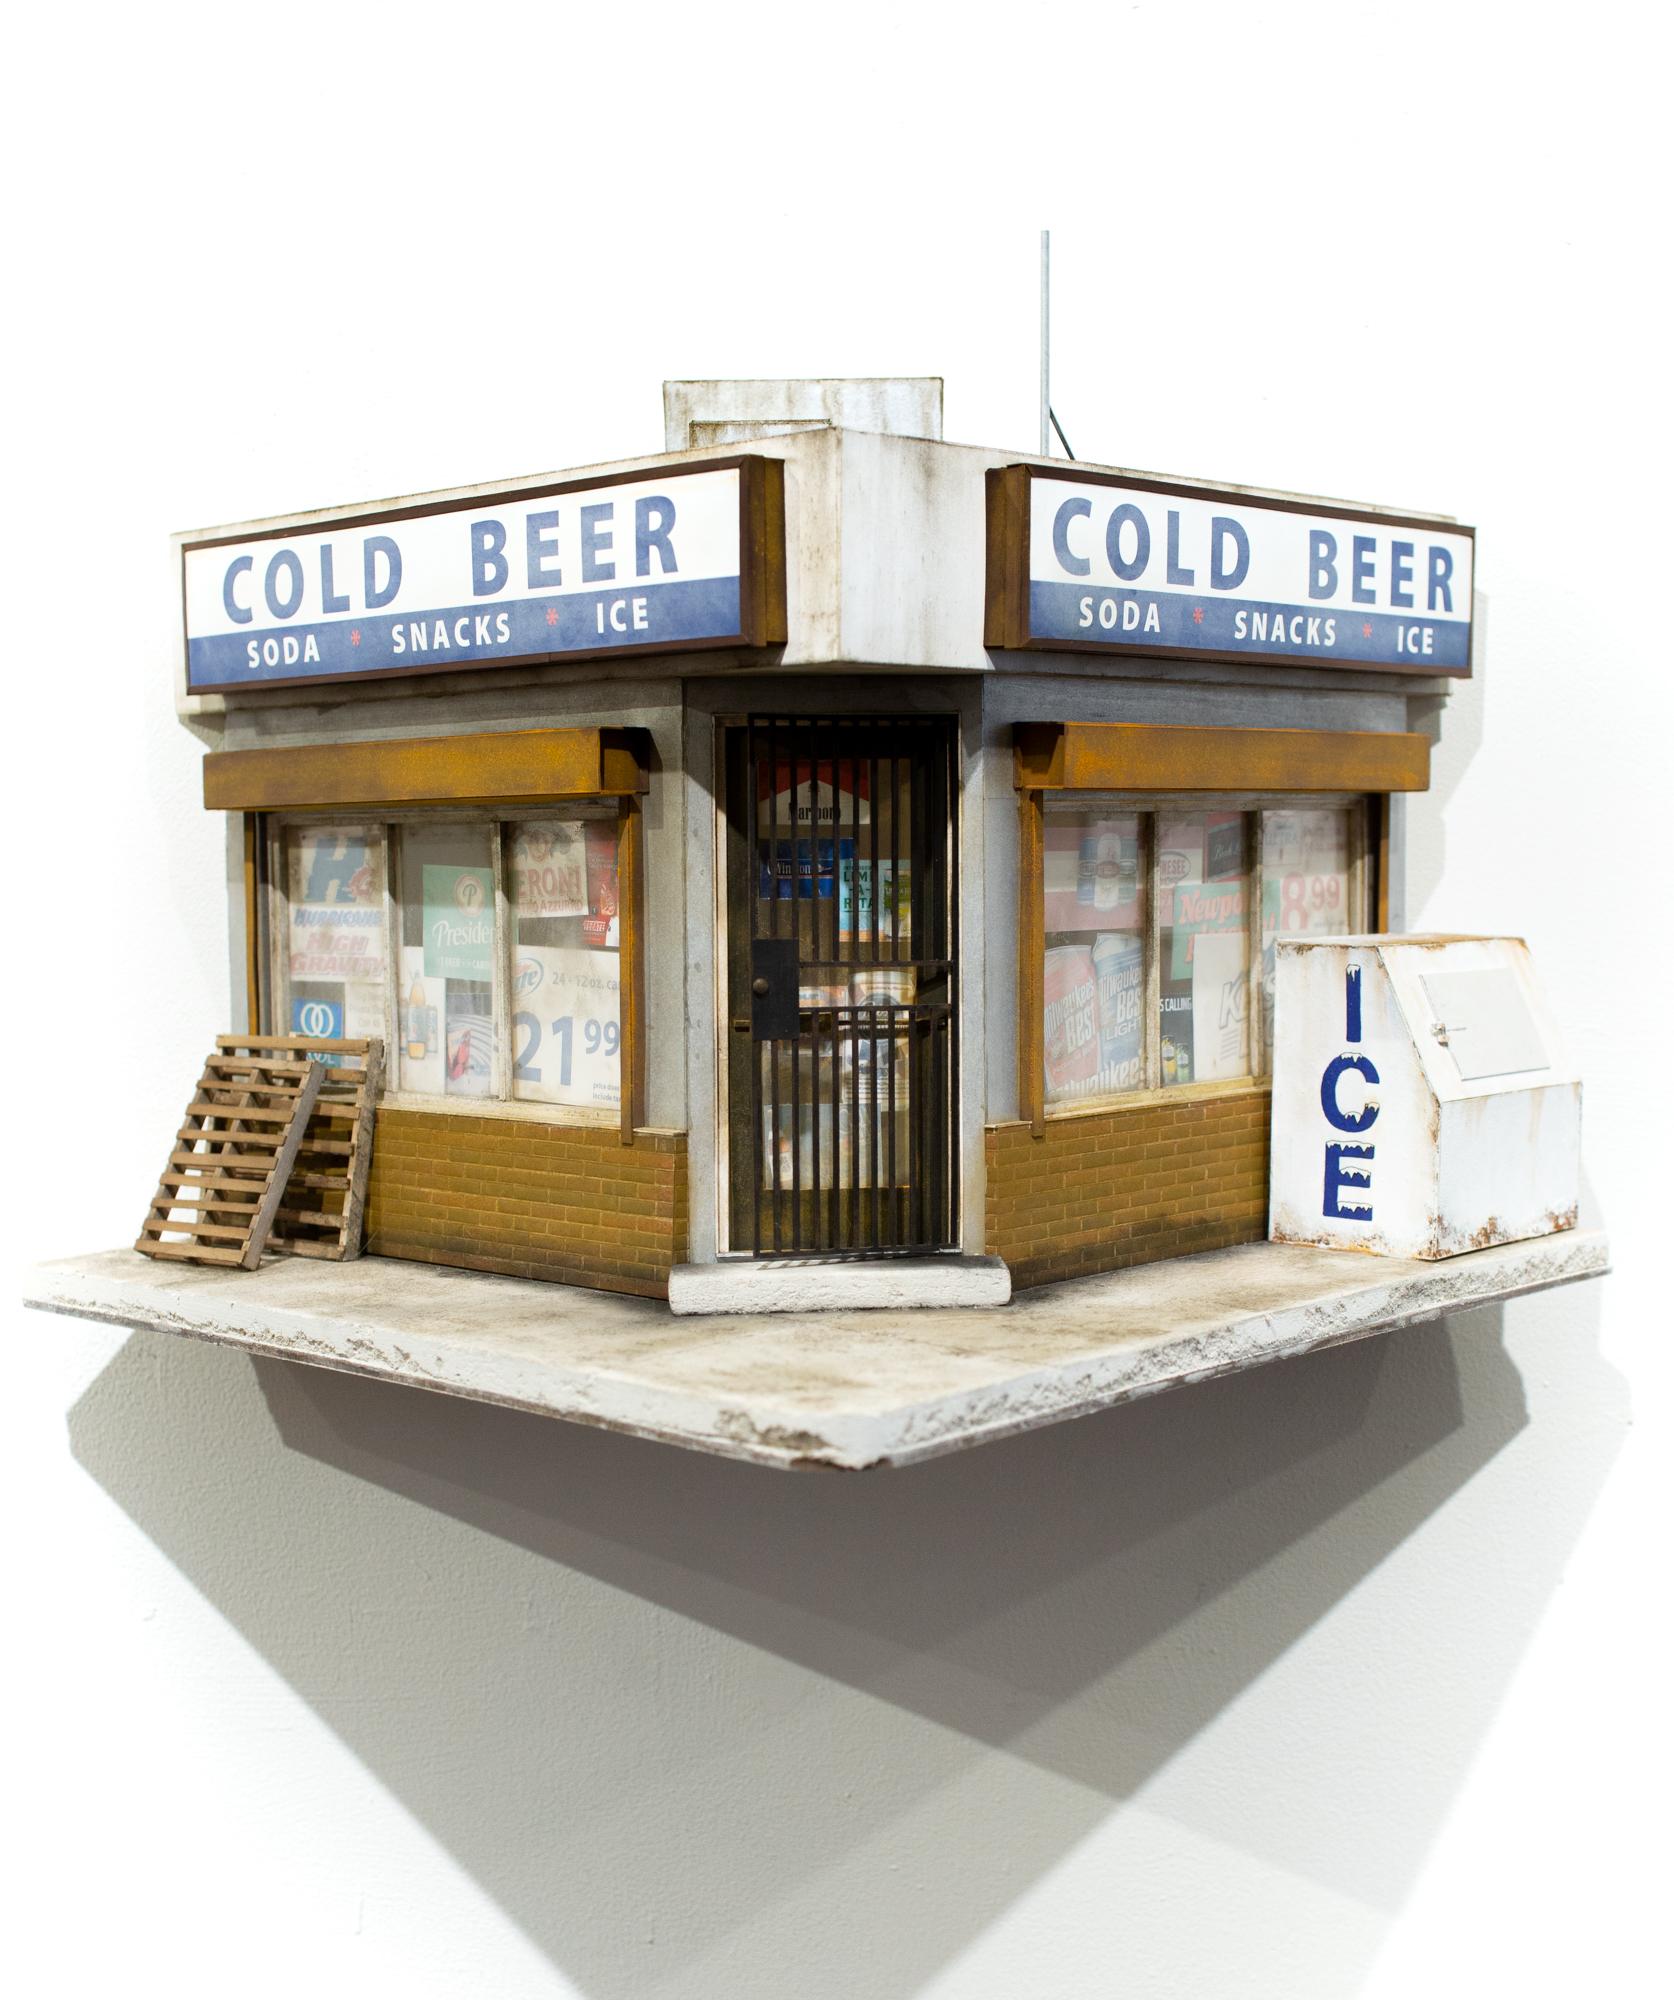 "Cold Beer", Miniature, Architecture, Building, Cityscape, Sculpture